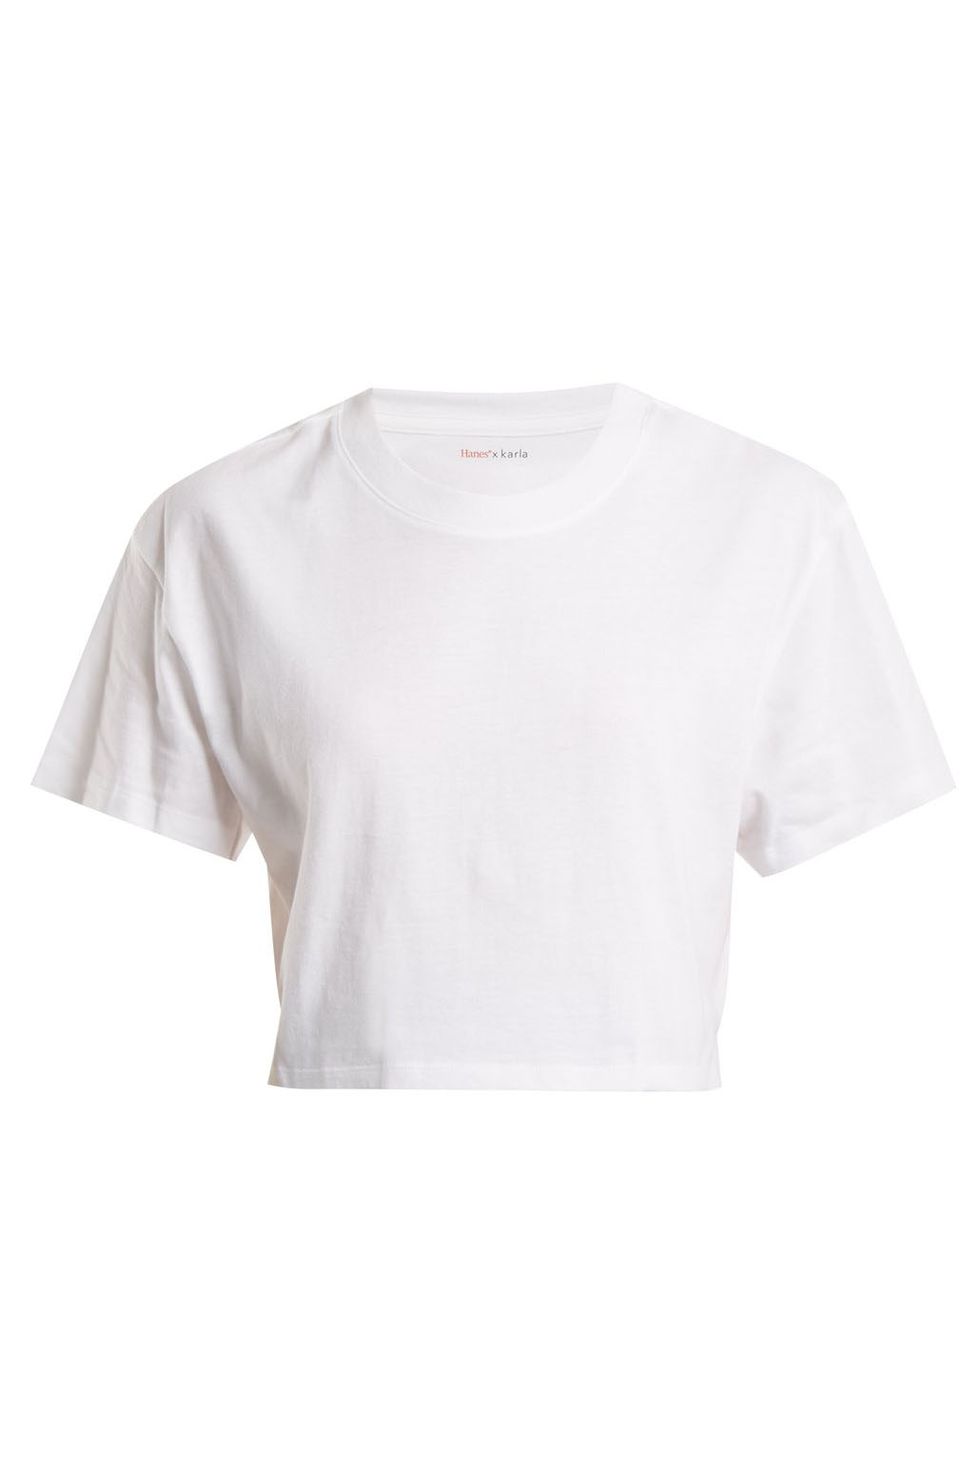 Hanes x Karla cropped white t-shirt